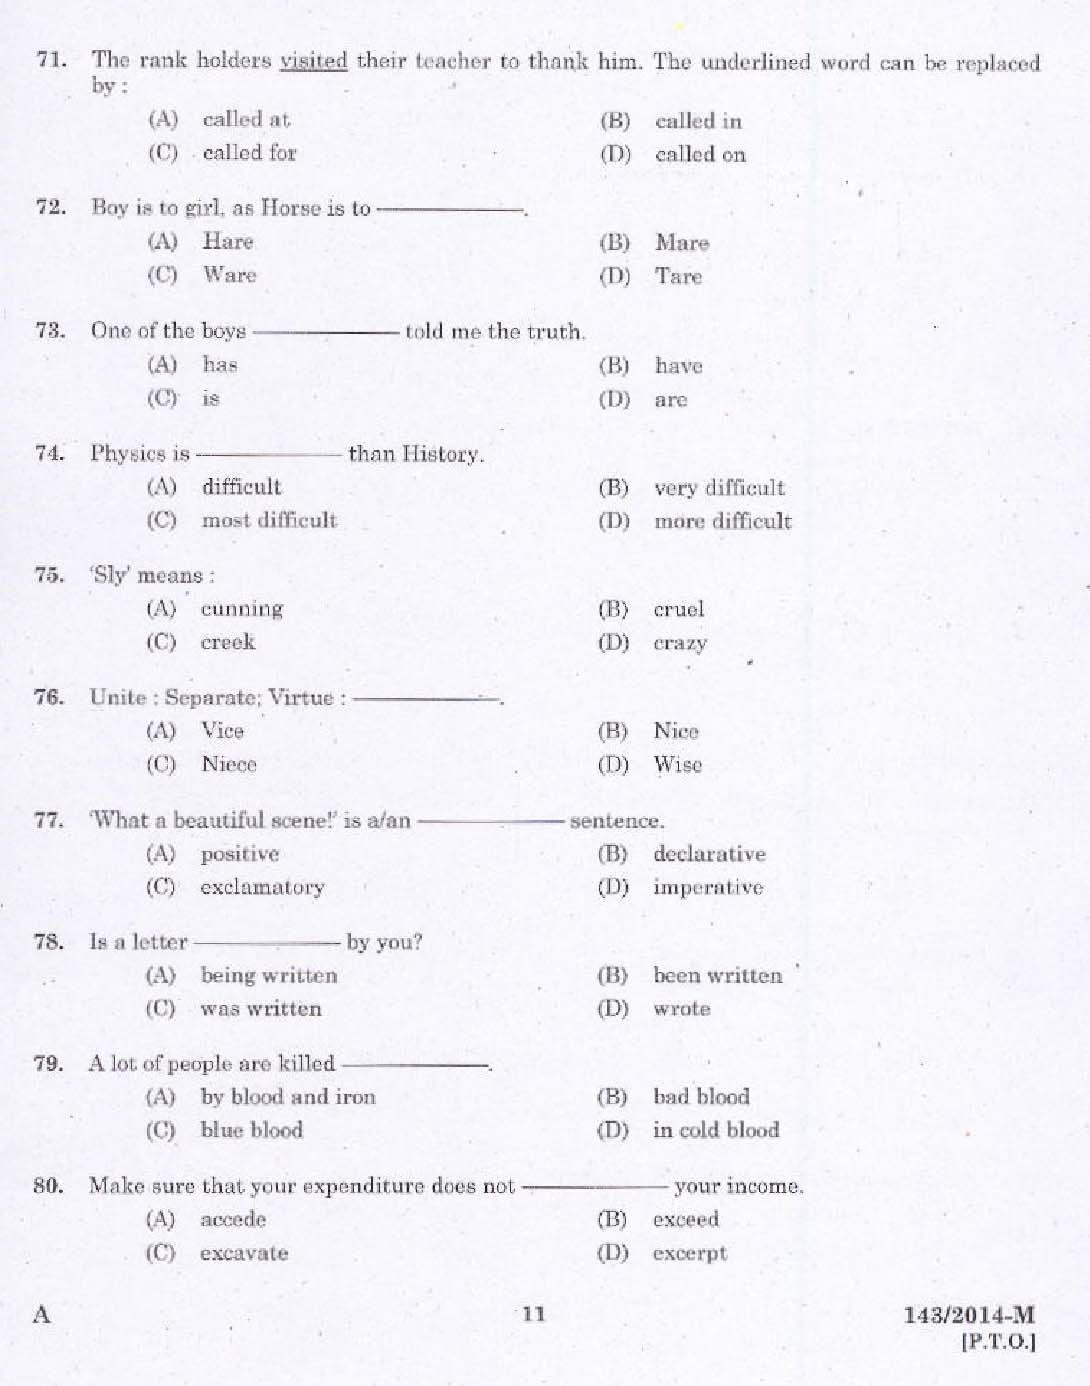 Kerala PSC Women Police Constable Exam Question Code 1432014 M 9